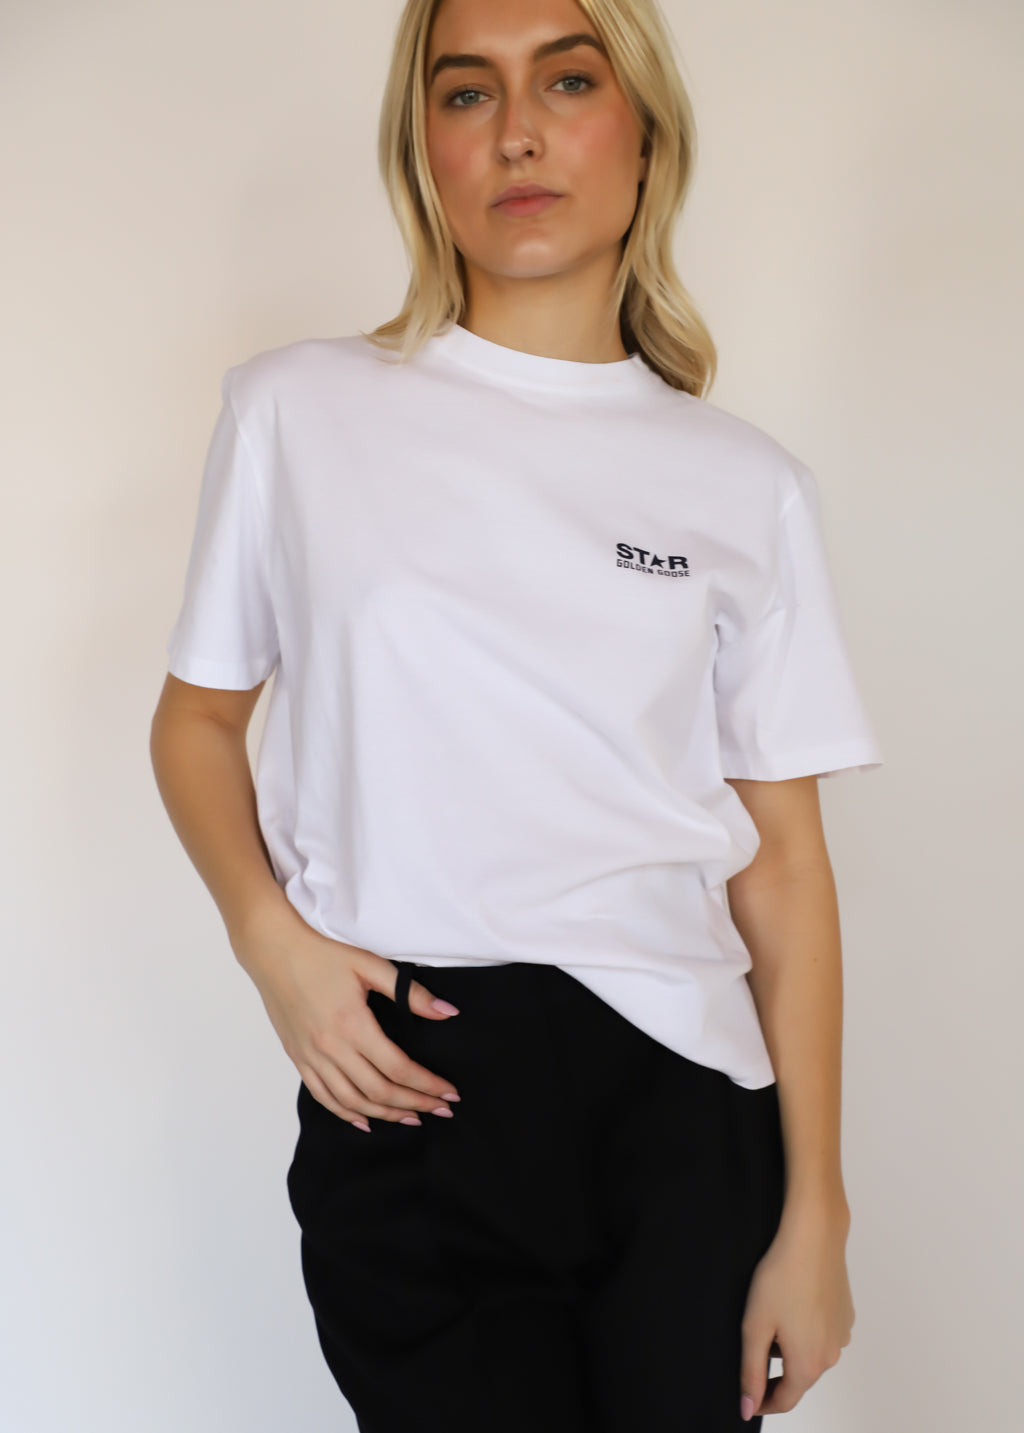 Deluxe Brand T-Shirt | Tula Online Boutique – Tula Boutique